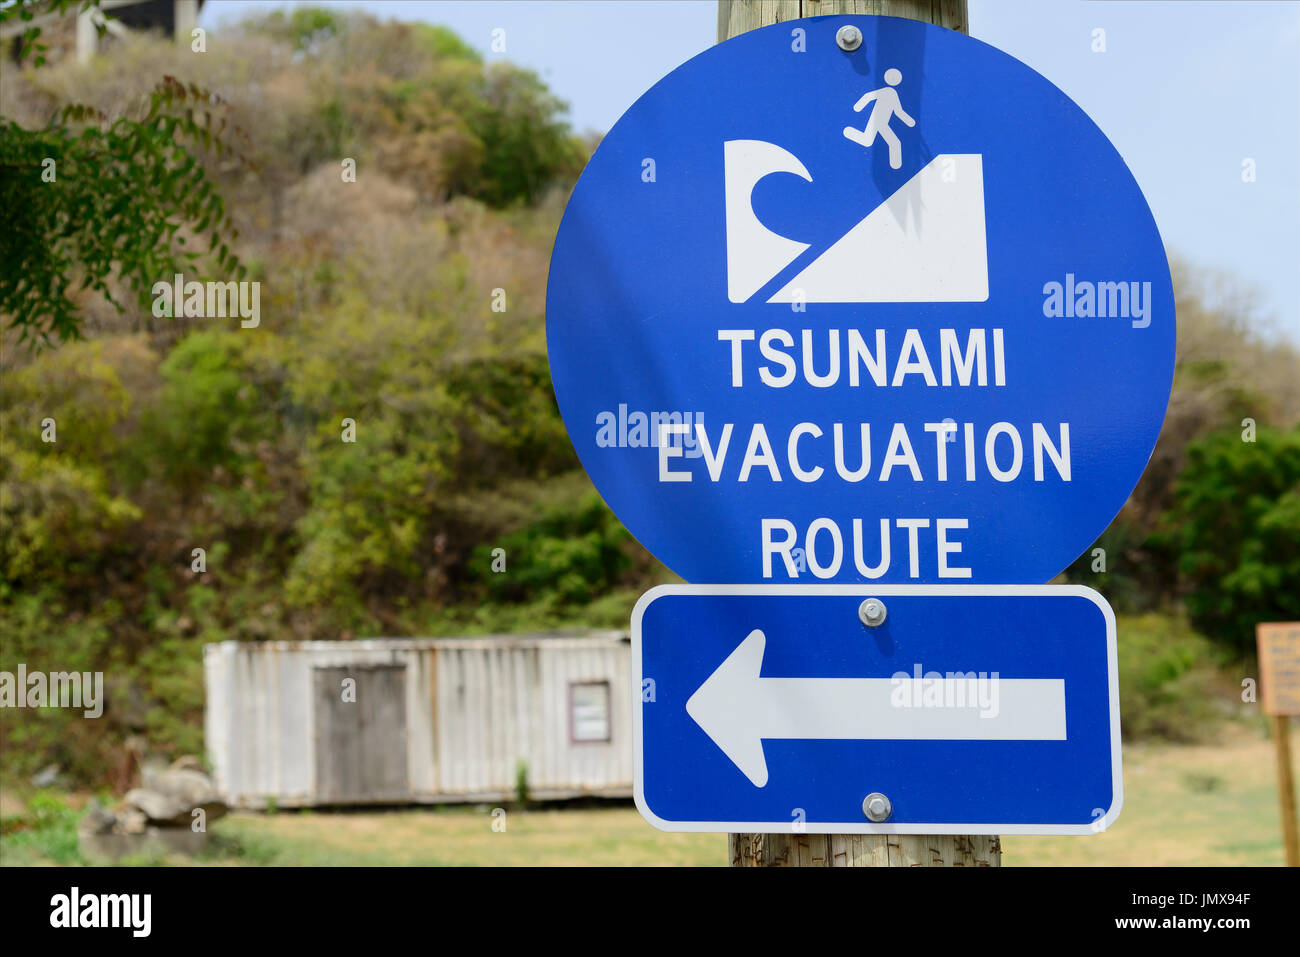 Information sign for Tsunami Evacuation Route, Virgin Gorda Island, British Virgin Islands, Caribbean Sea Stock Photo